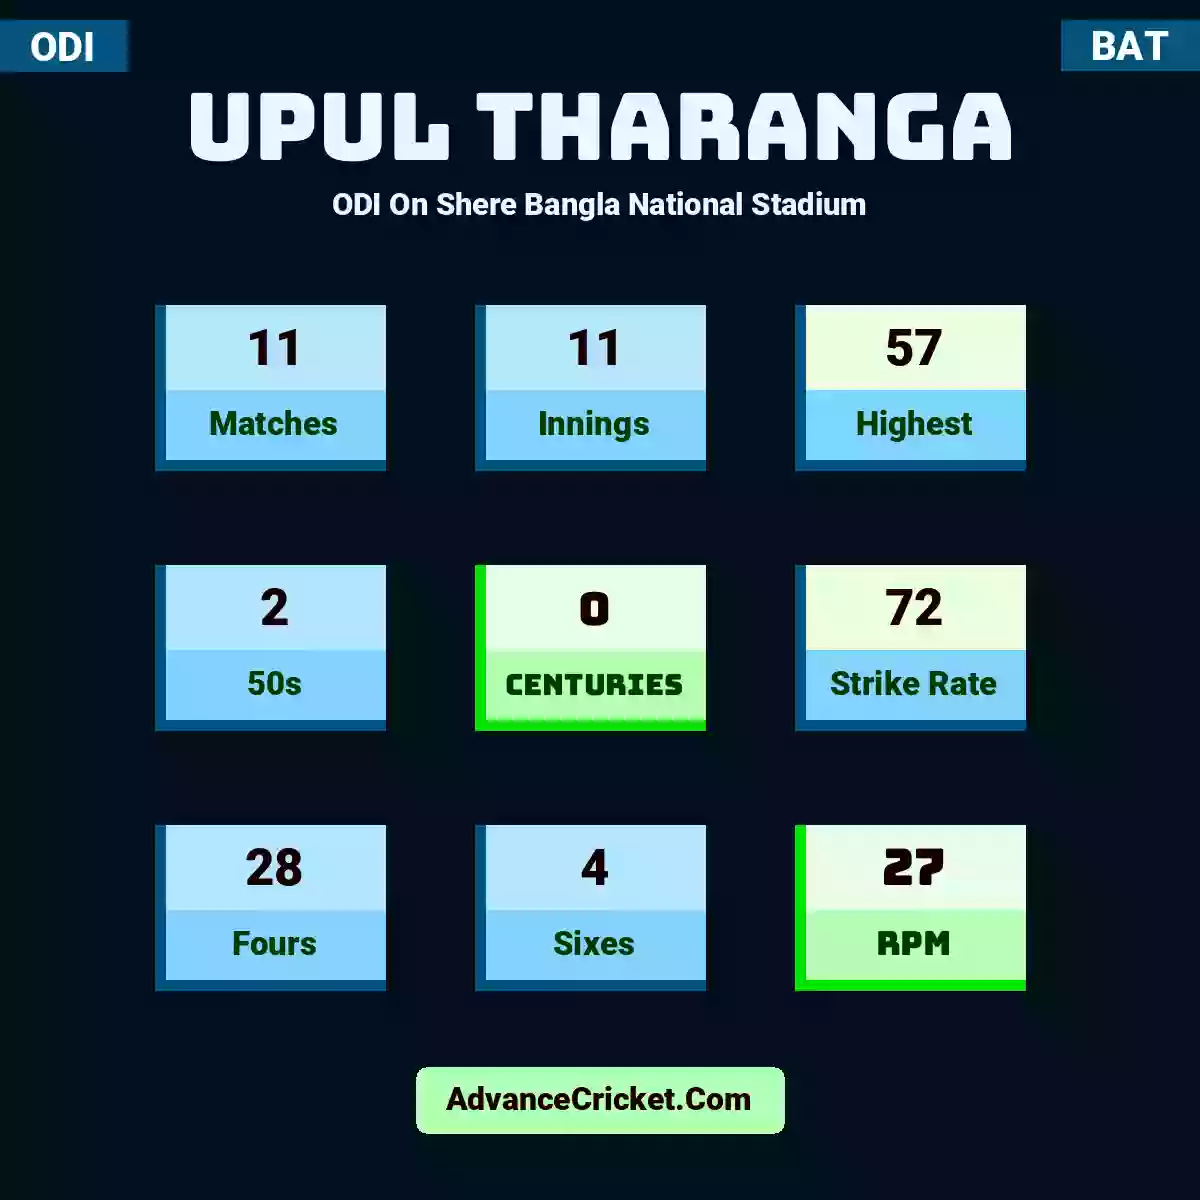 Upul Tharanga ODI  On Shere Bangla National Stadium, Upul Tharanga played 11 matches, scored 57 runs as highest, 2 half-centuries, and 0 centuries, with a strike rate of 72. U.Tharanga hit 28 fours and 4 sixes, with an RPM of 27.